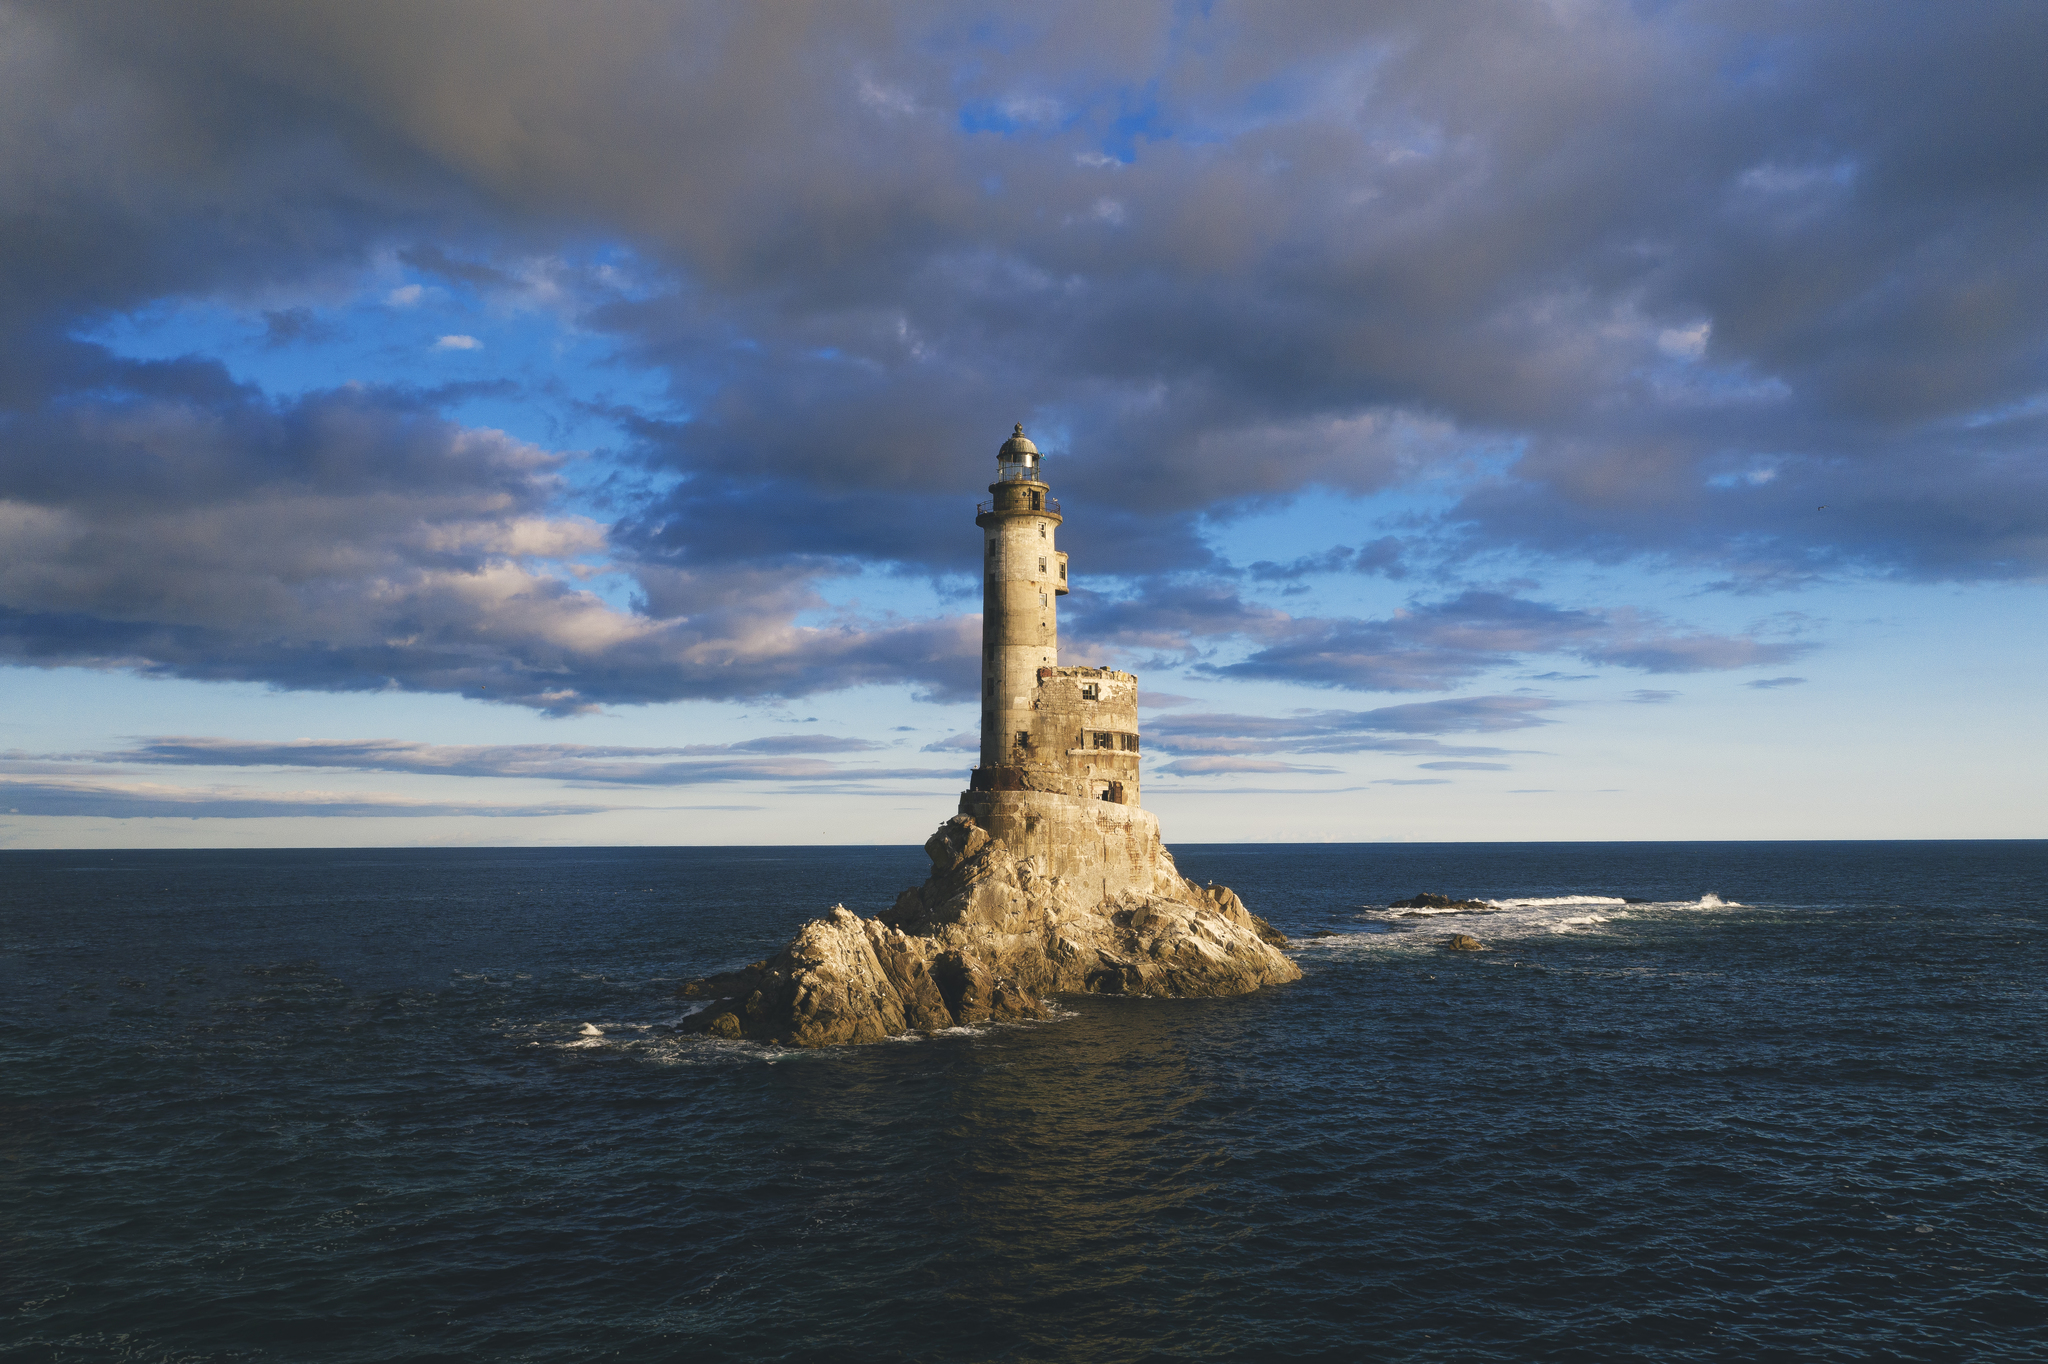 Aniva Lighthouse - My, Russia, Lighthouse, Sakhalin, Travels, The photo, Abandoned, Longpost